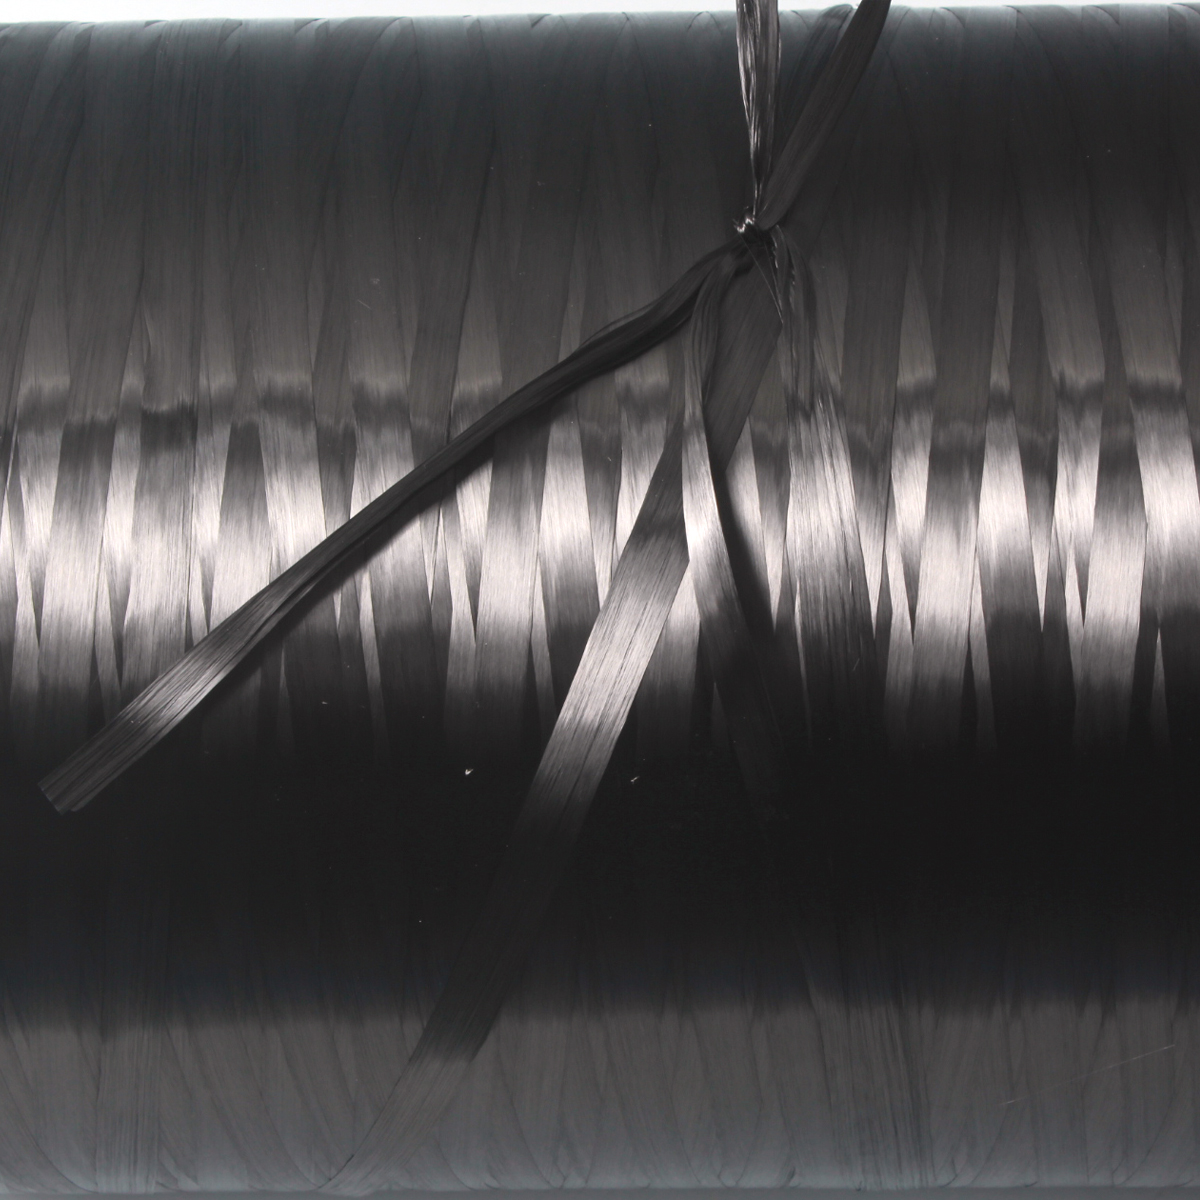 Imported High Quality 3K Carbon Fiber Filament Yarn